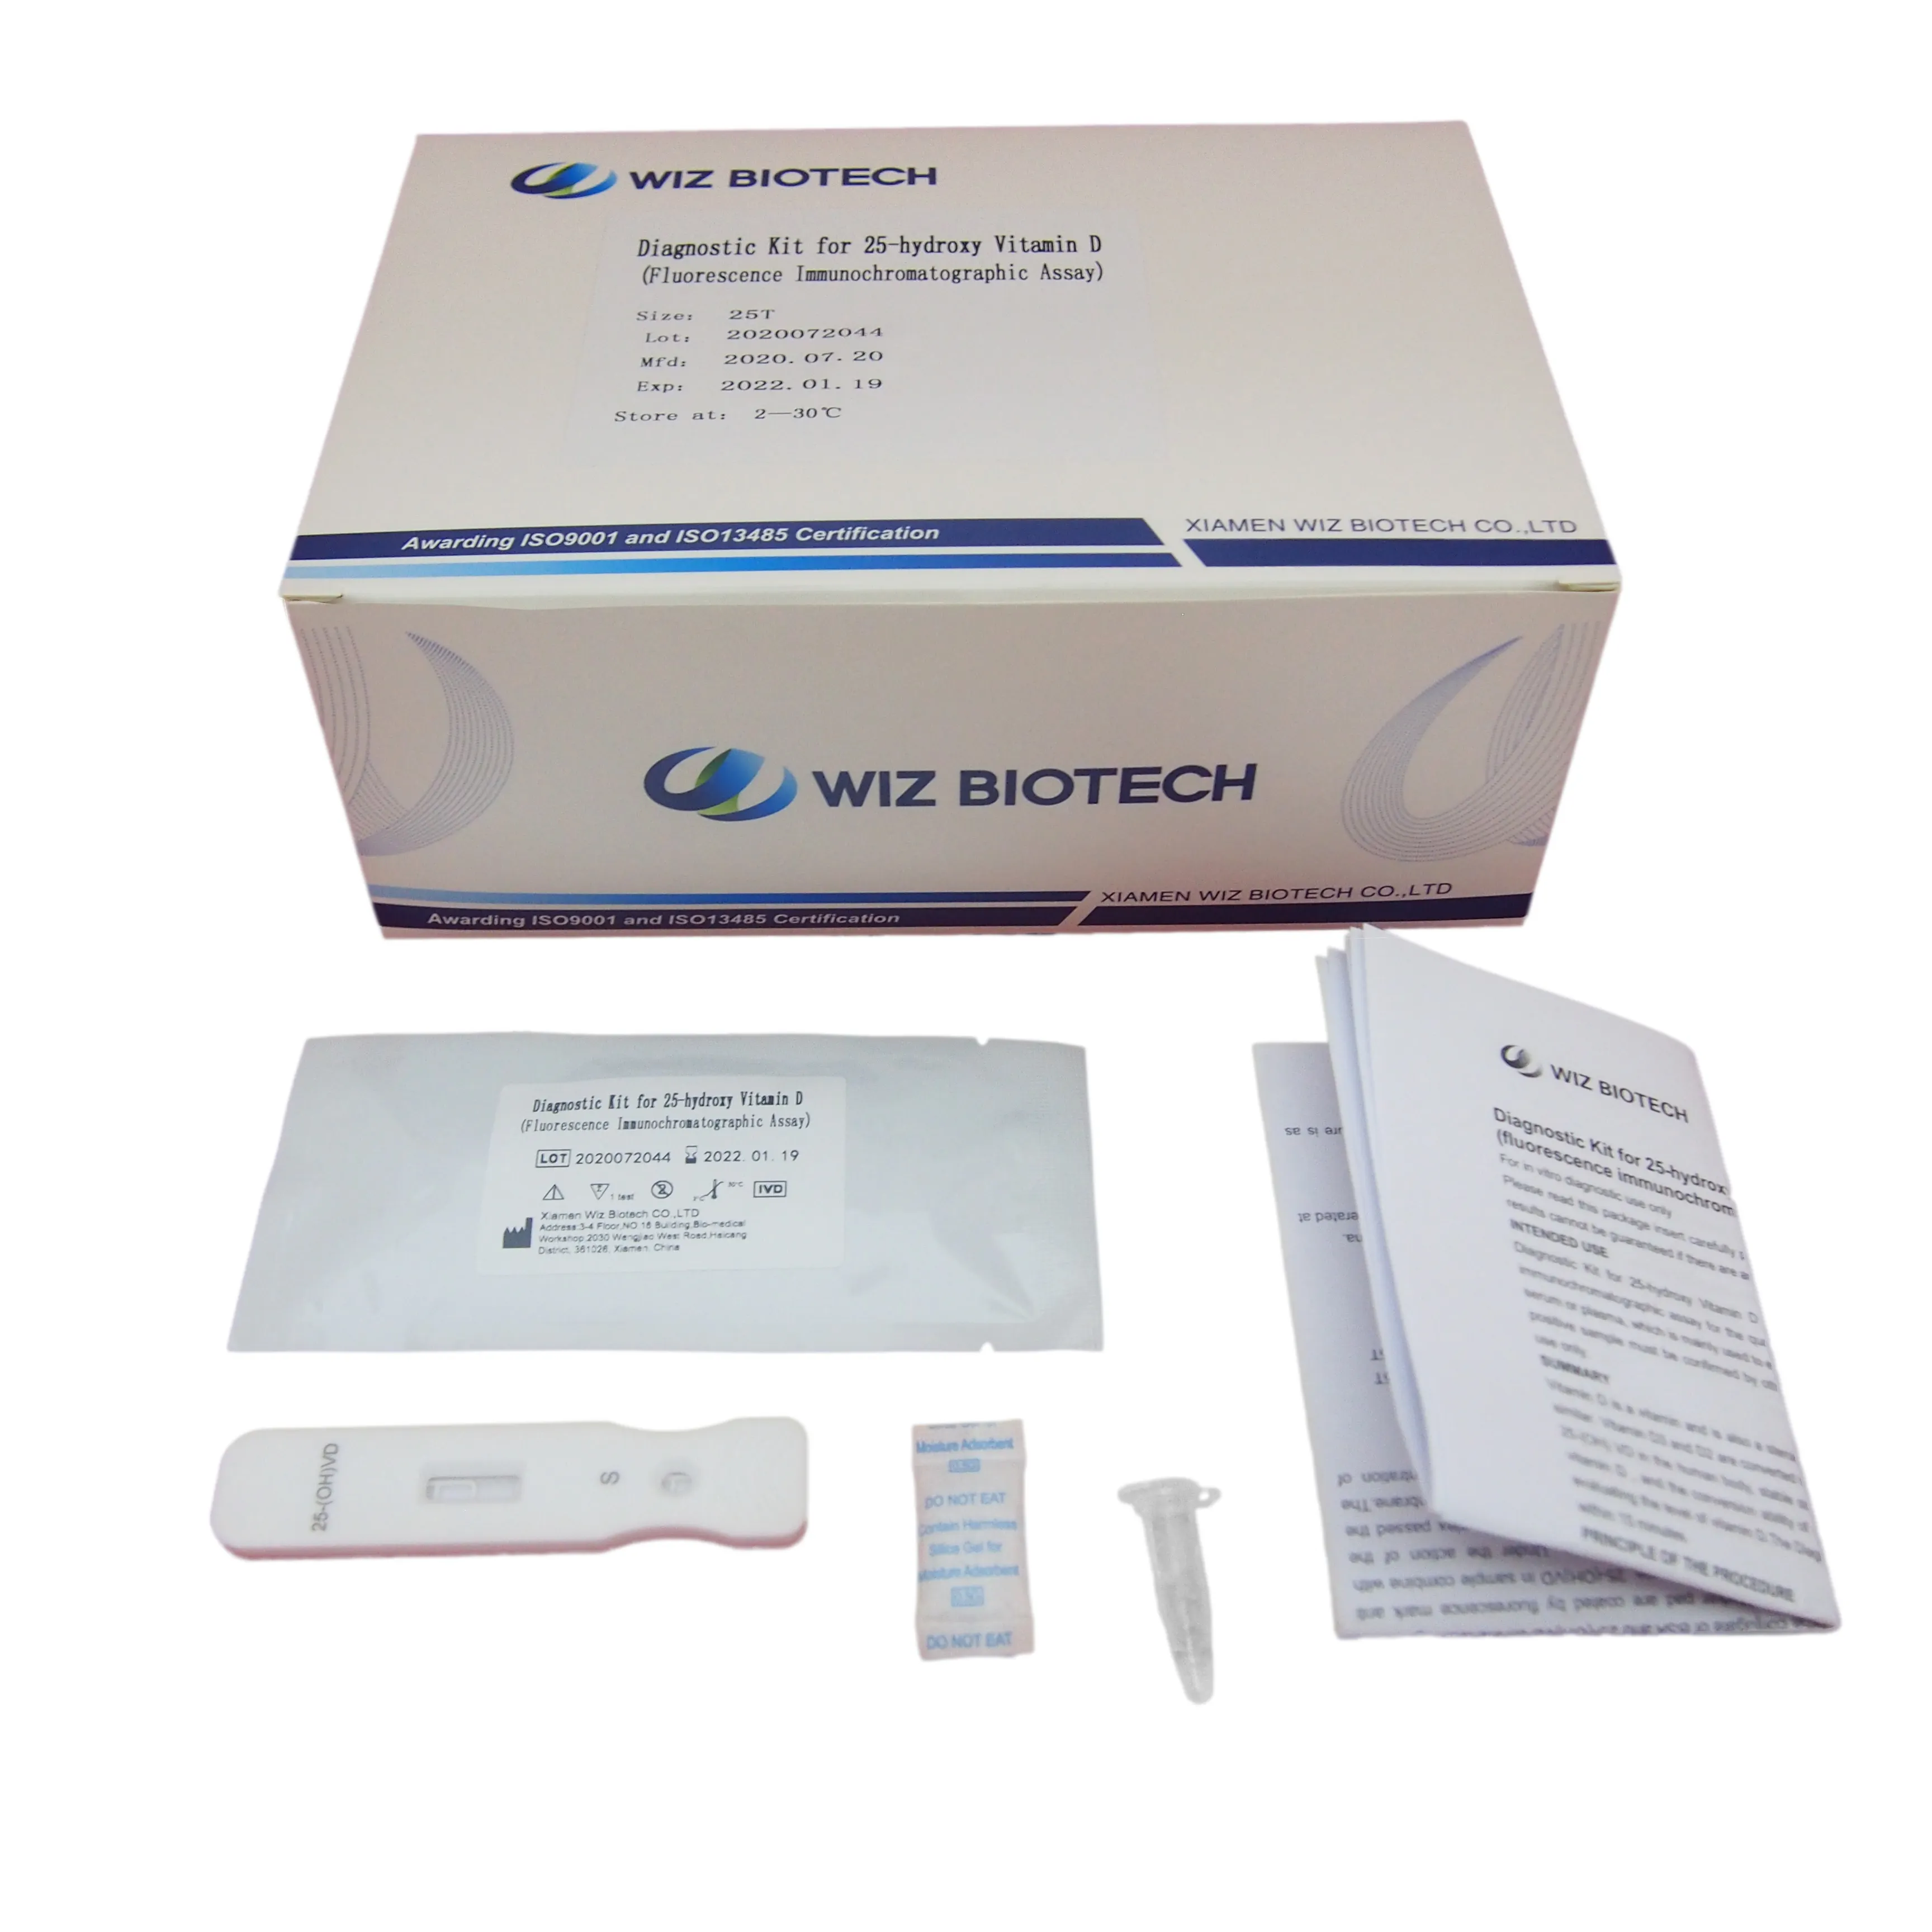 POCT reagent fluorescence Immunochromatographic vitamin D D3 rapid test kit